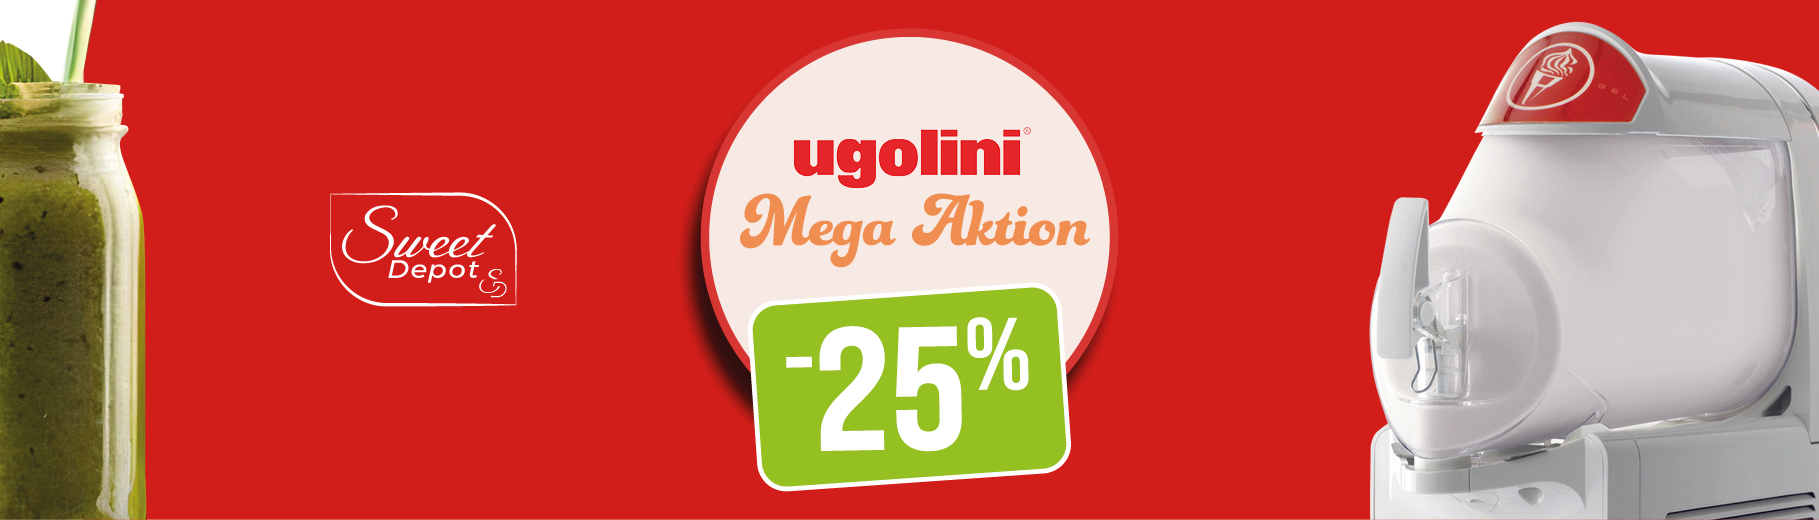 ugolini-mega-aktion_banner